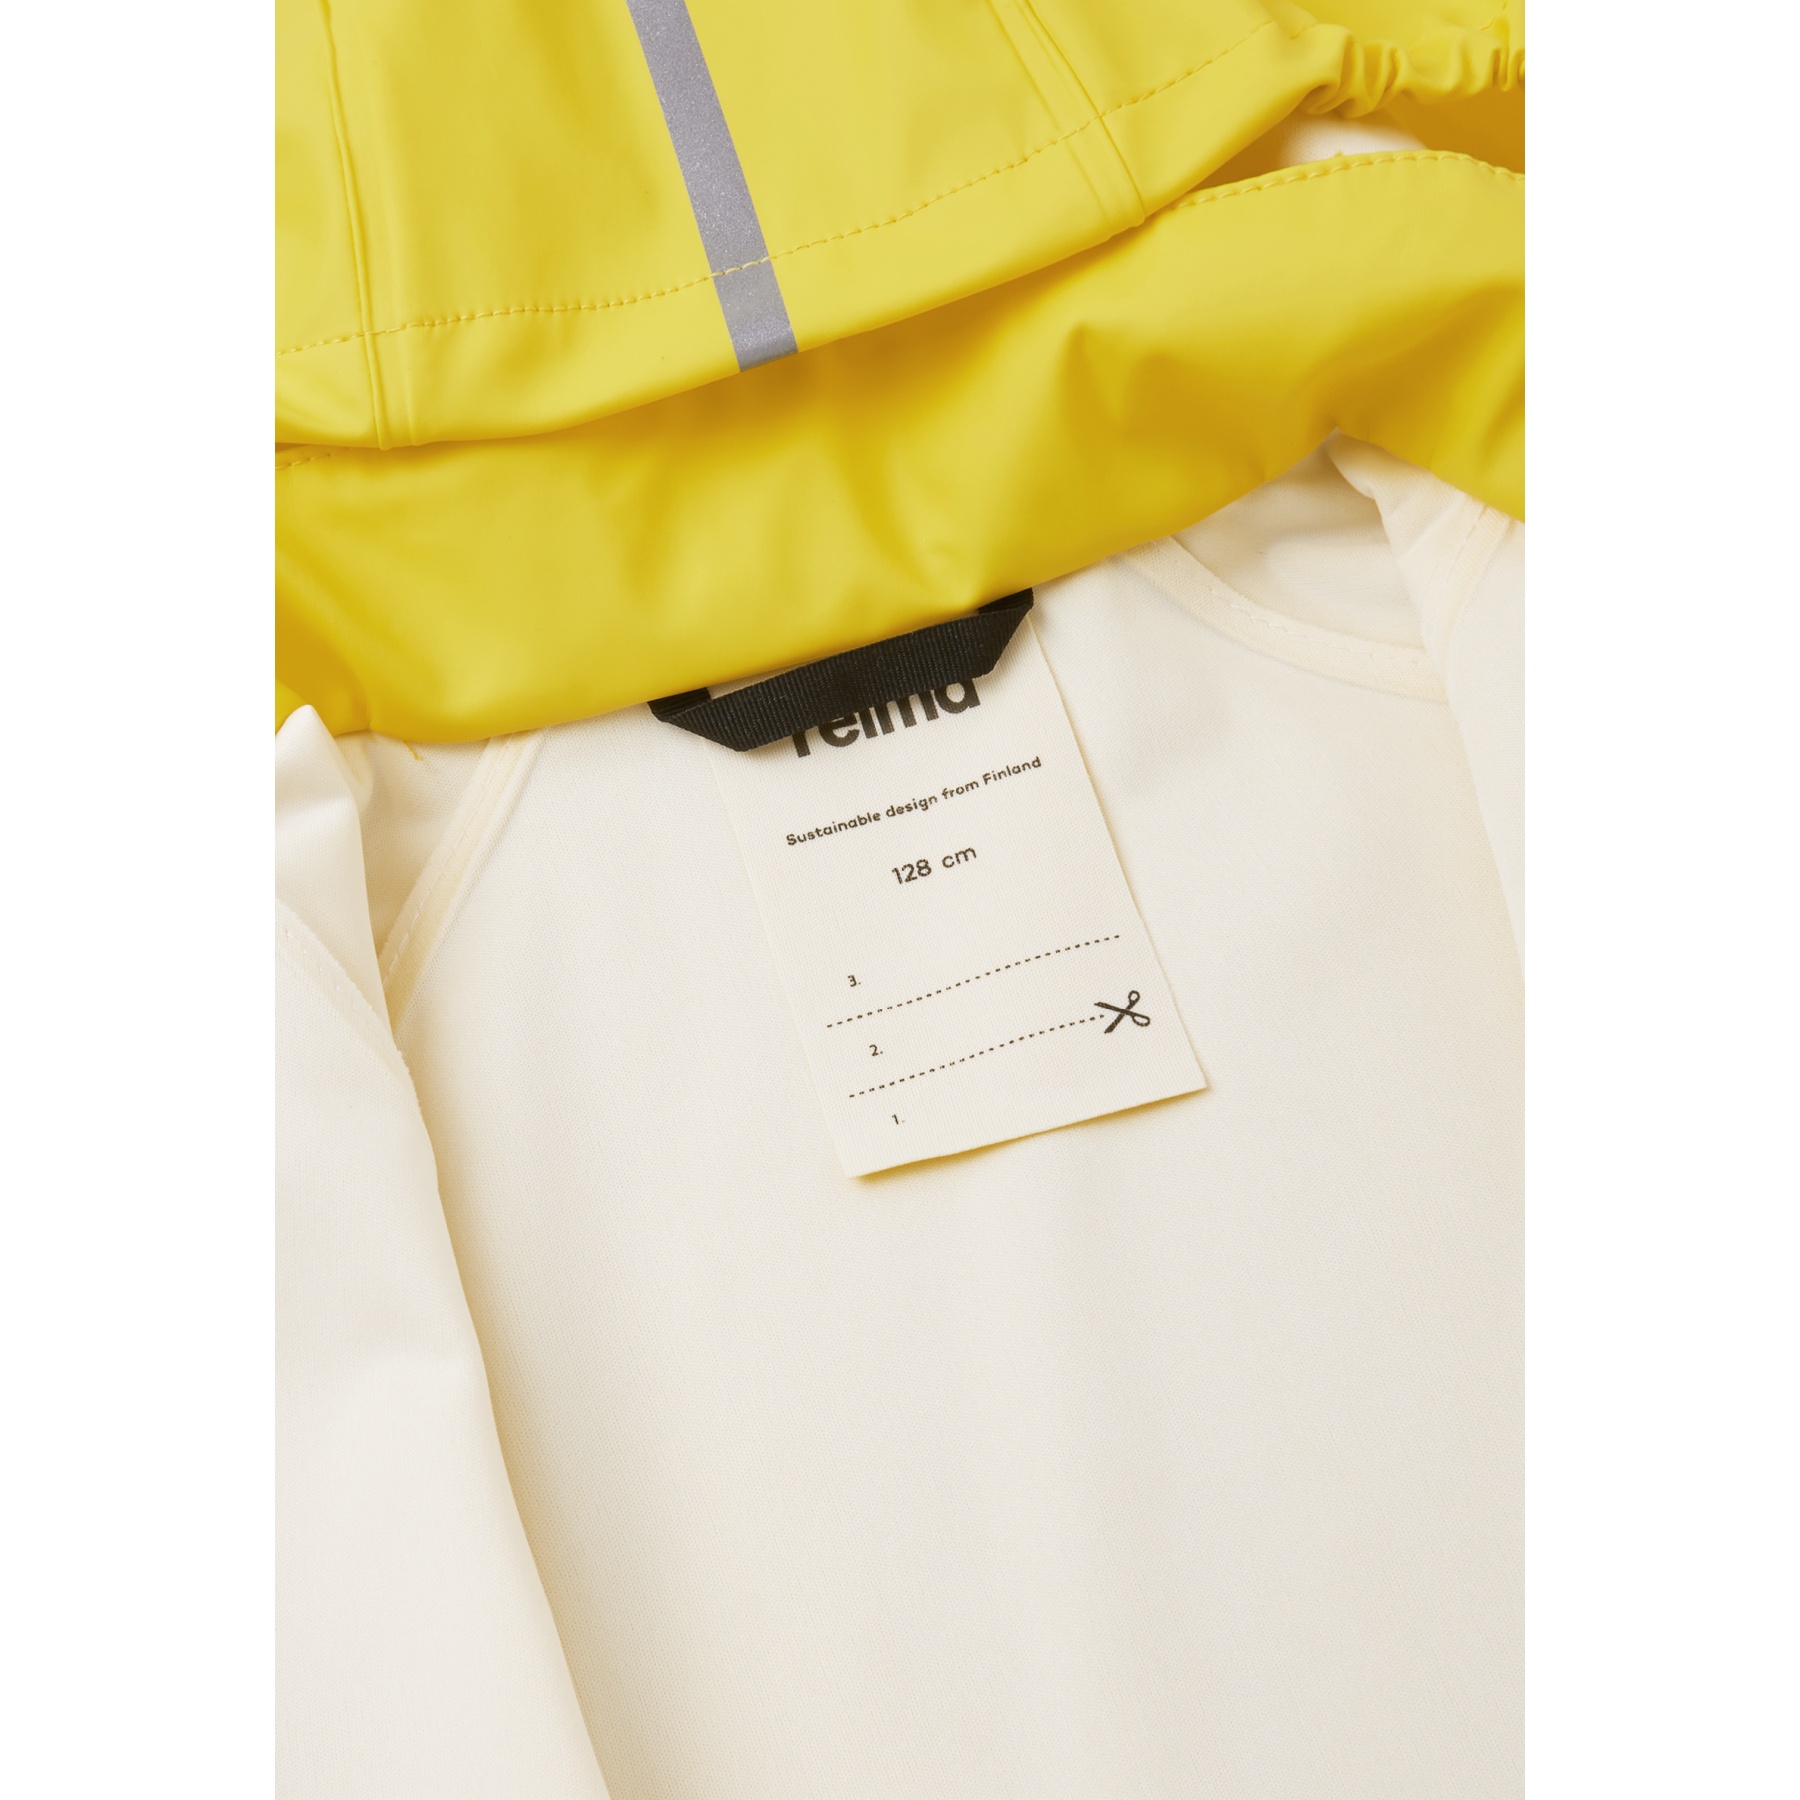 Pantalon de pluie enfant Reima Lammikko - yellow/yellow